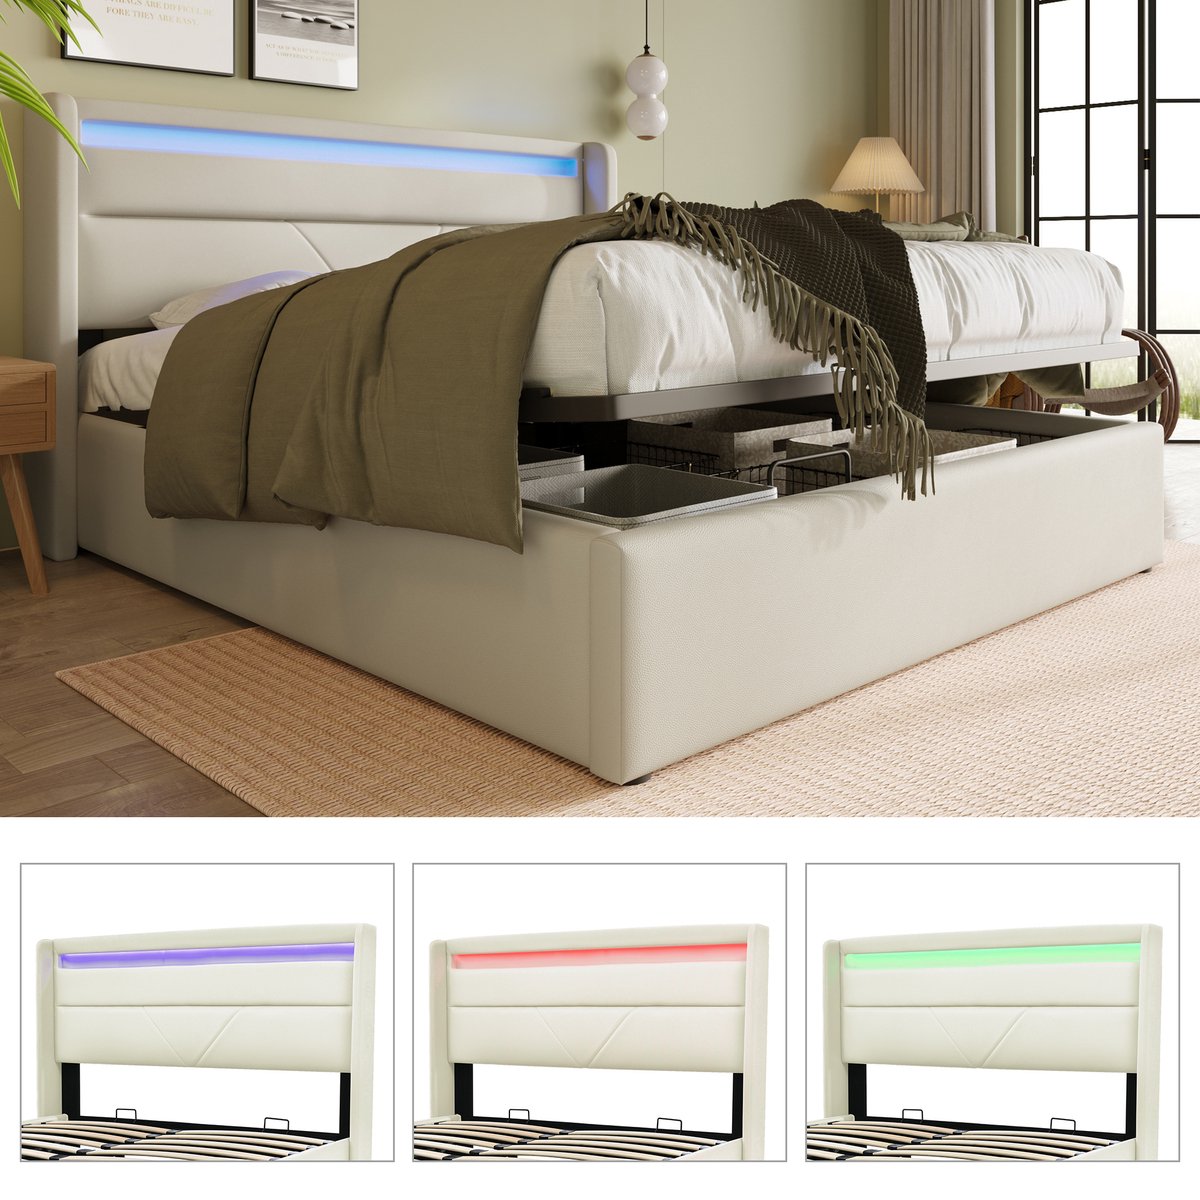 Hydraulisch opbergbed met LED-verlichtingsstrip - gestoffeerd bed 140x200cm - tweepersoonsbedframe - functioneel bed - wit (met afstandsbediening)